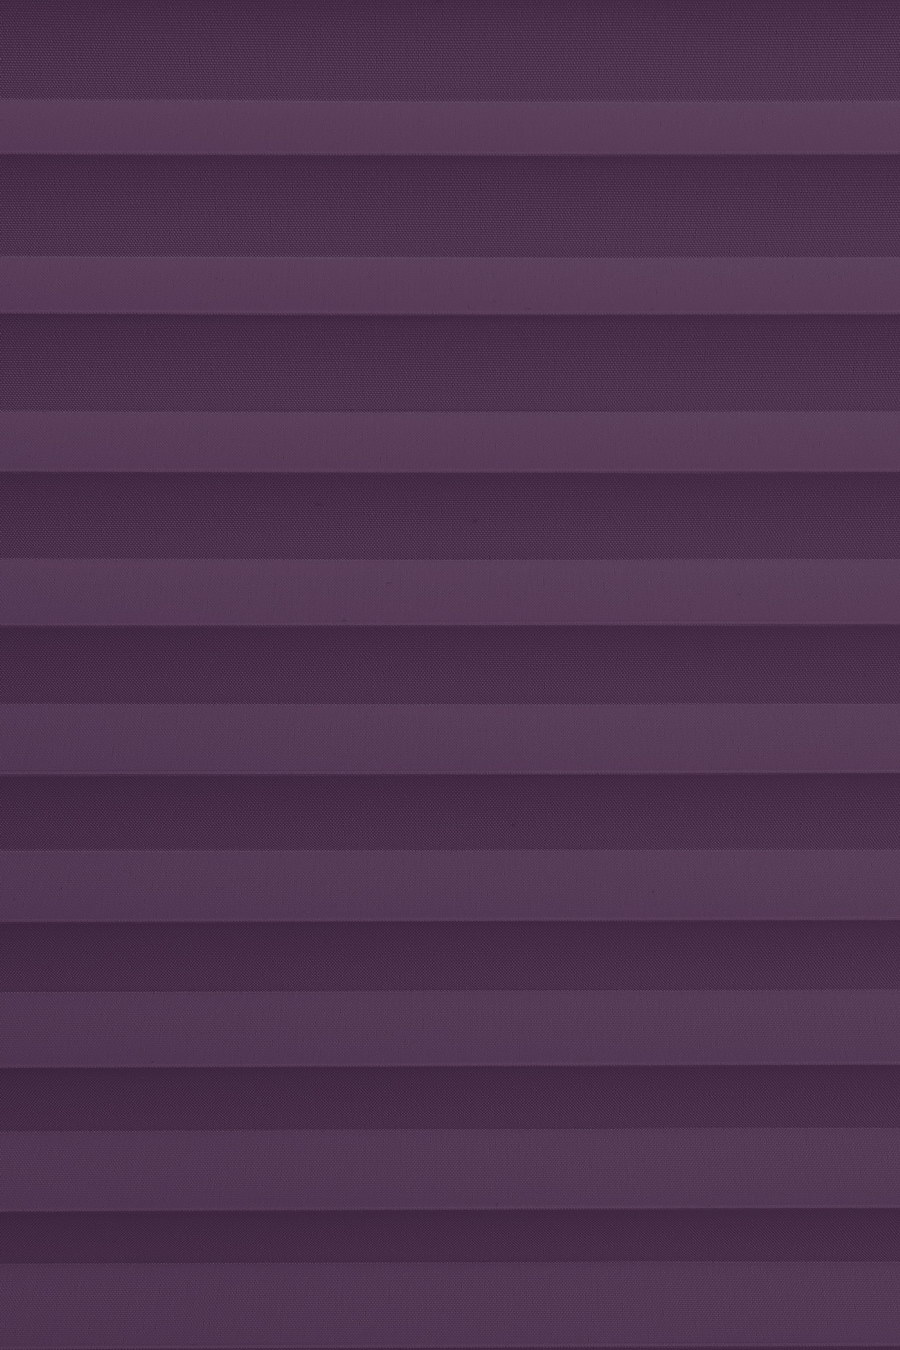 pure-purple BASIC UNI 9104